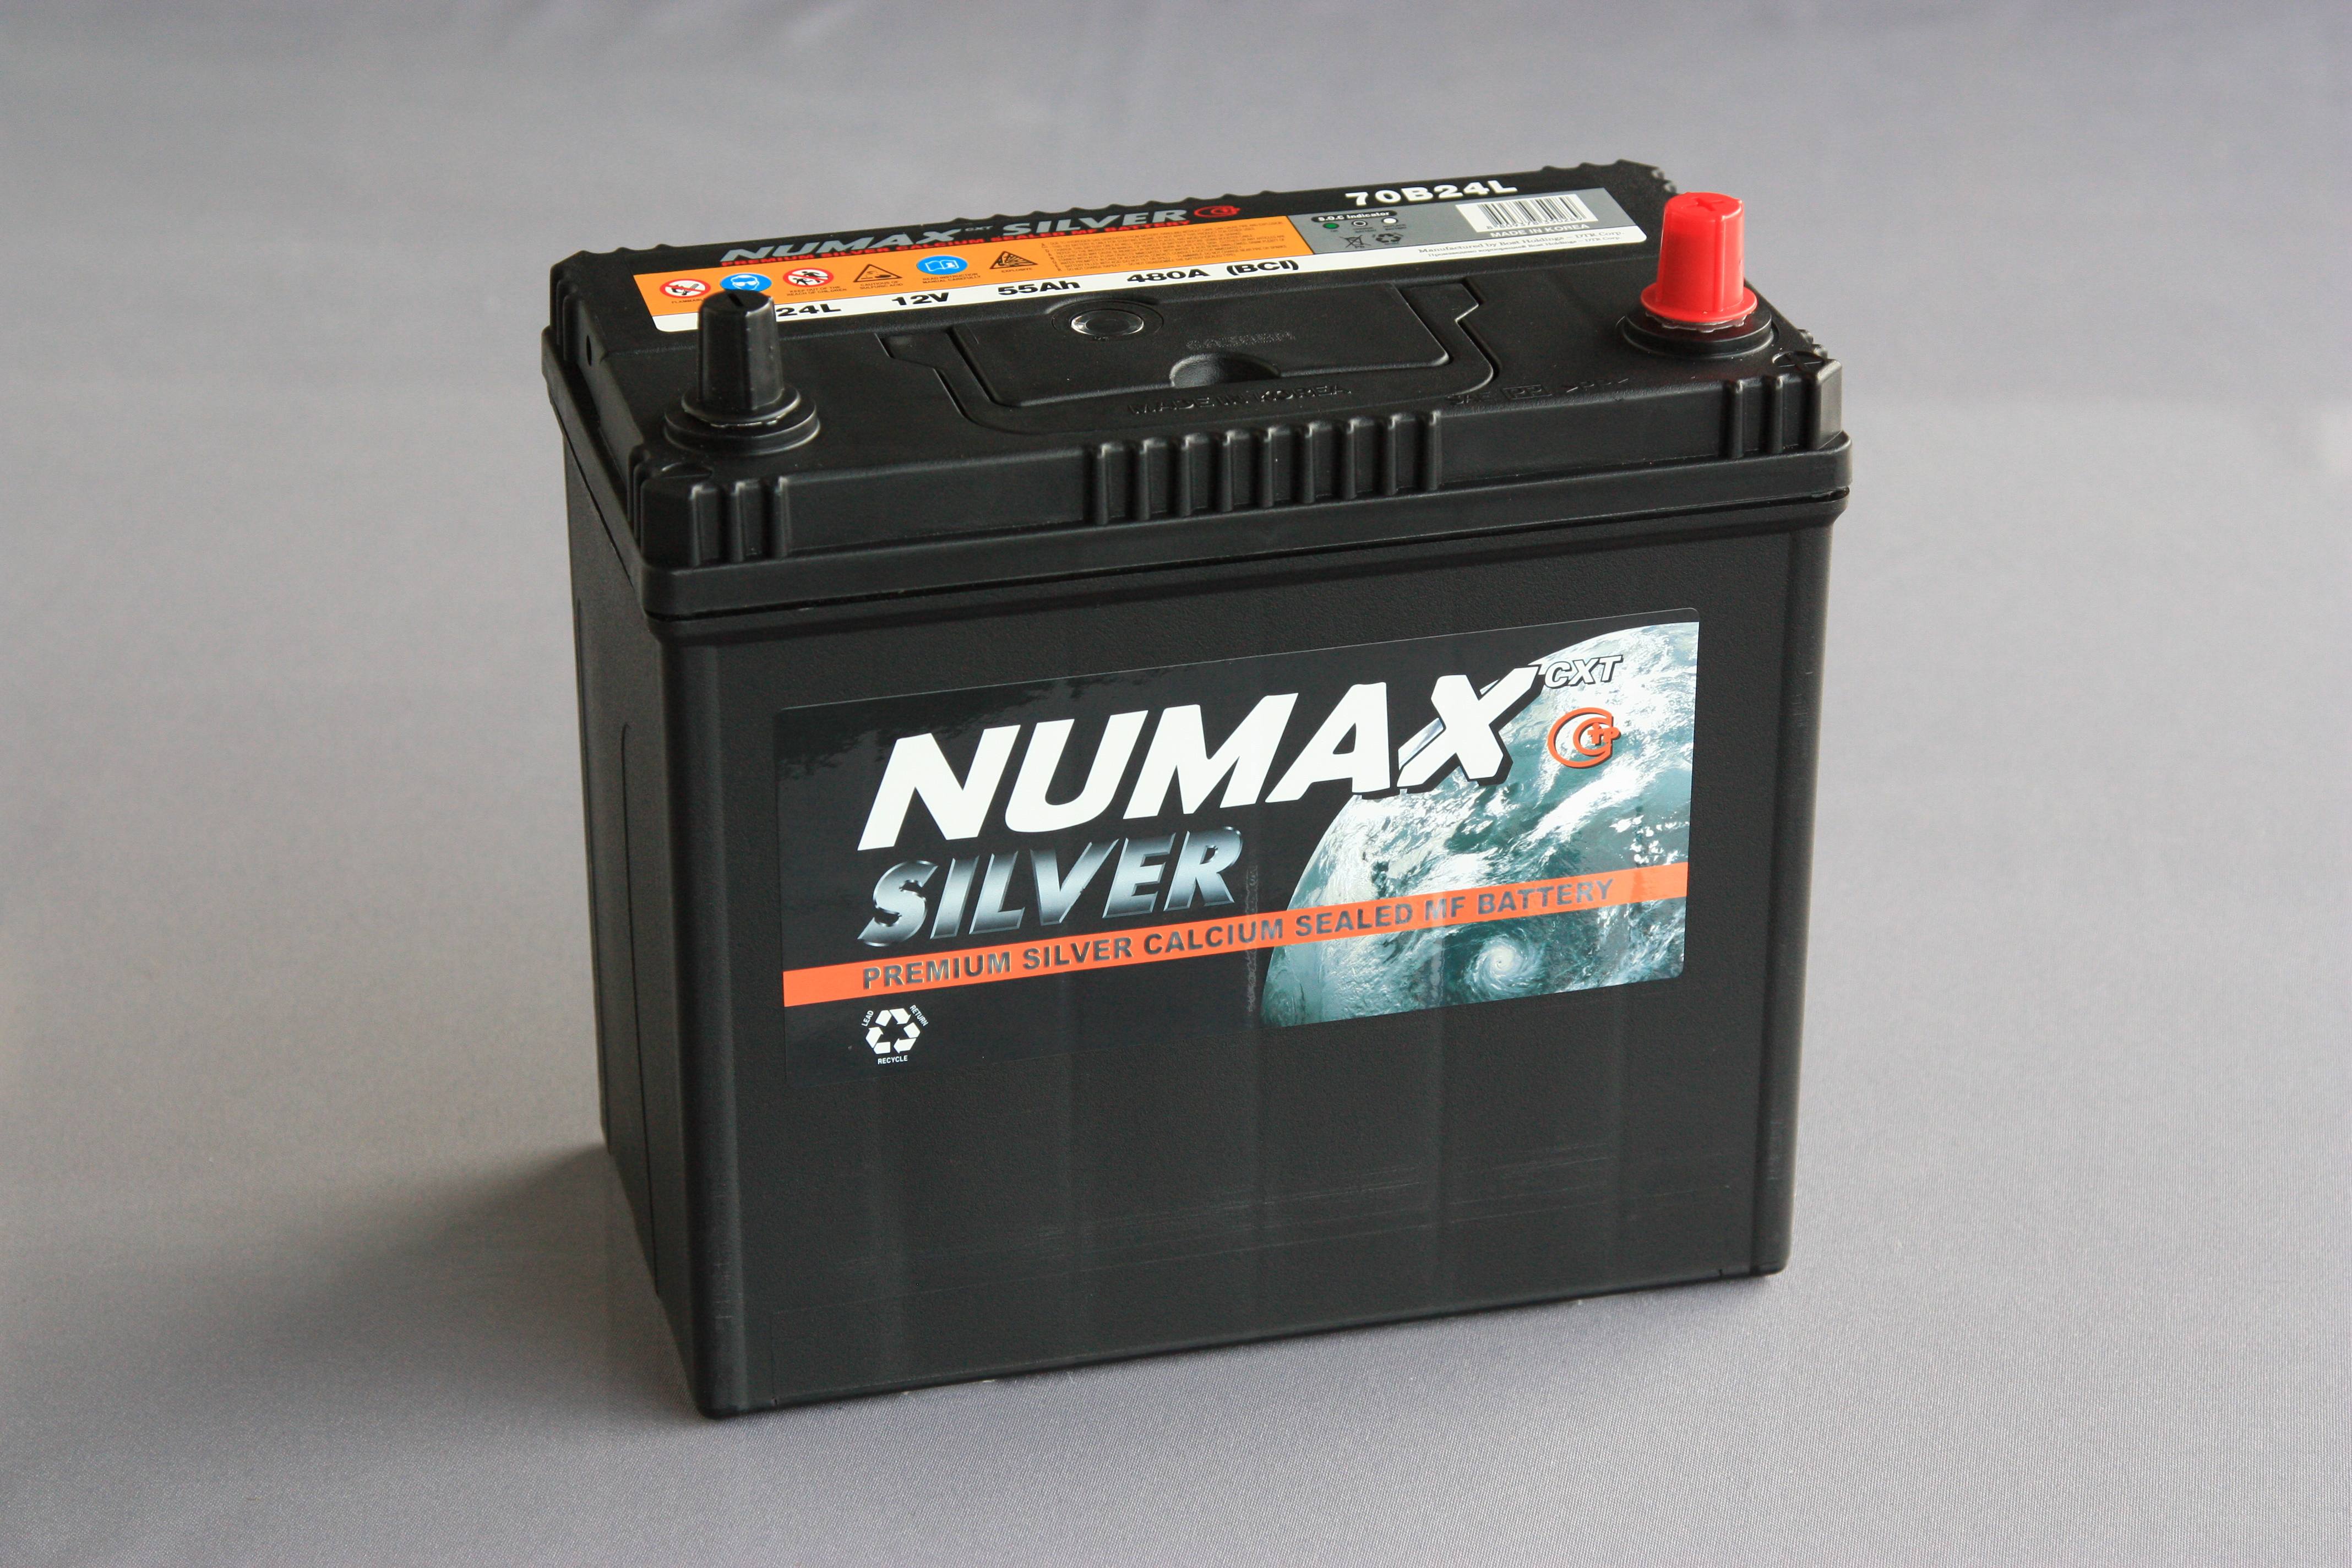 NUMAX SILVER 6CT - 80 A1  o.п.  ст. кл. яп. ст. (80Ah, EN 680A)